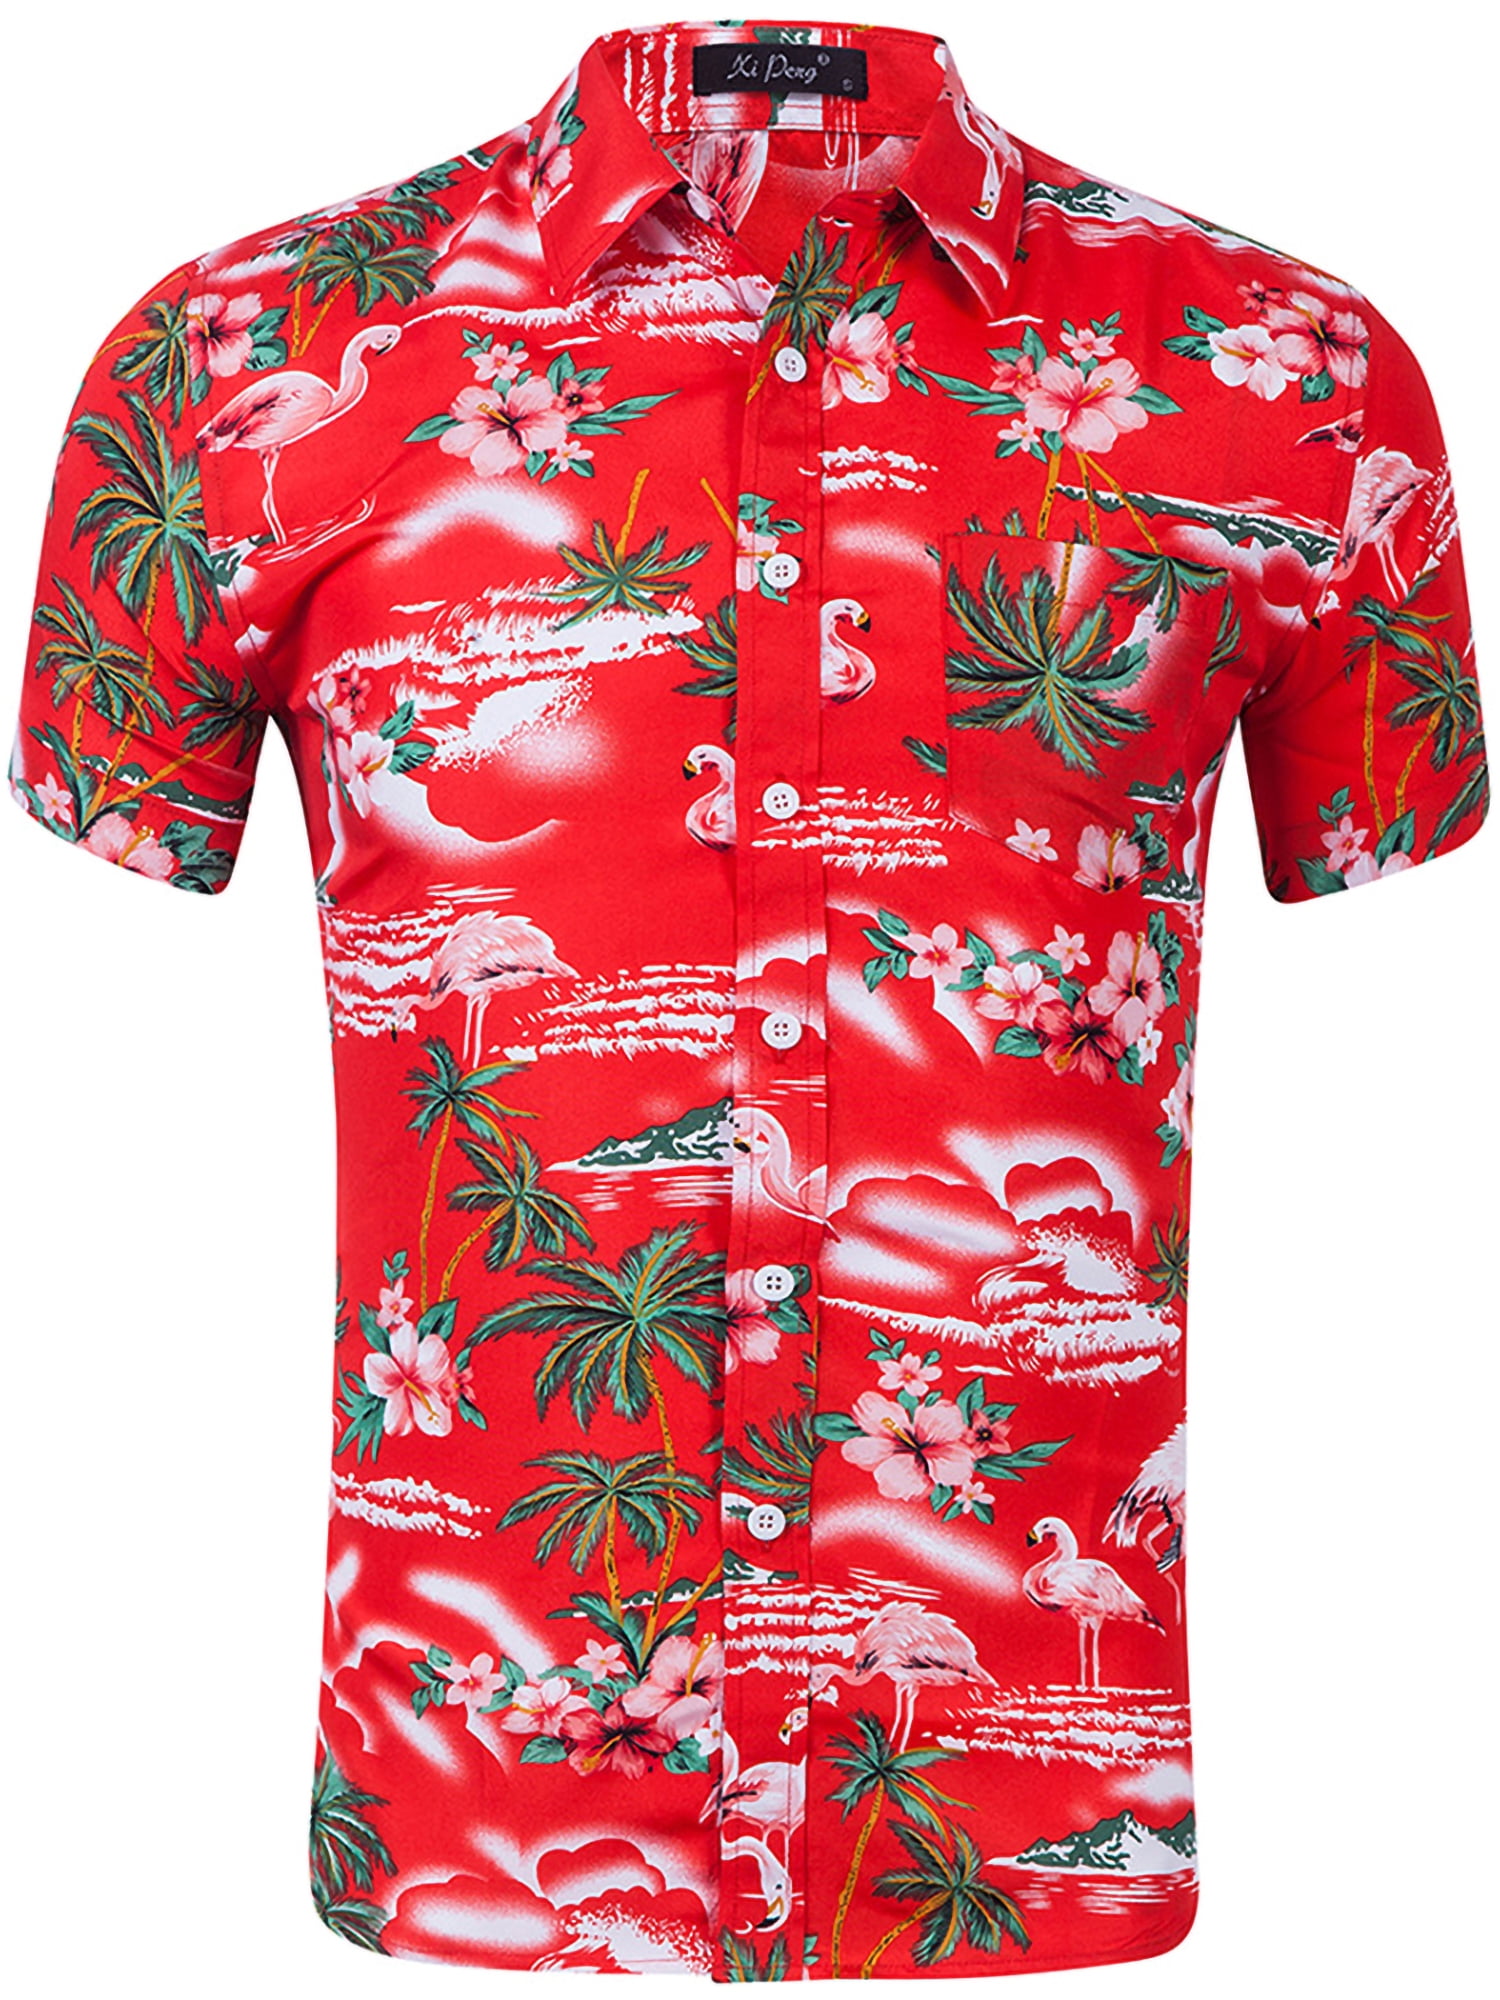 Mens Floral Button Up Shirt Short Sleeve Slim Fit Casual Shirt Hawaiian Shirts 